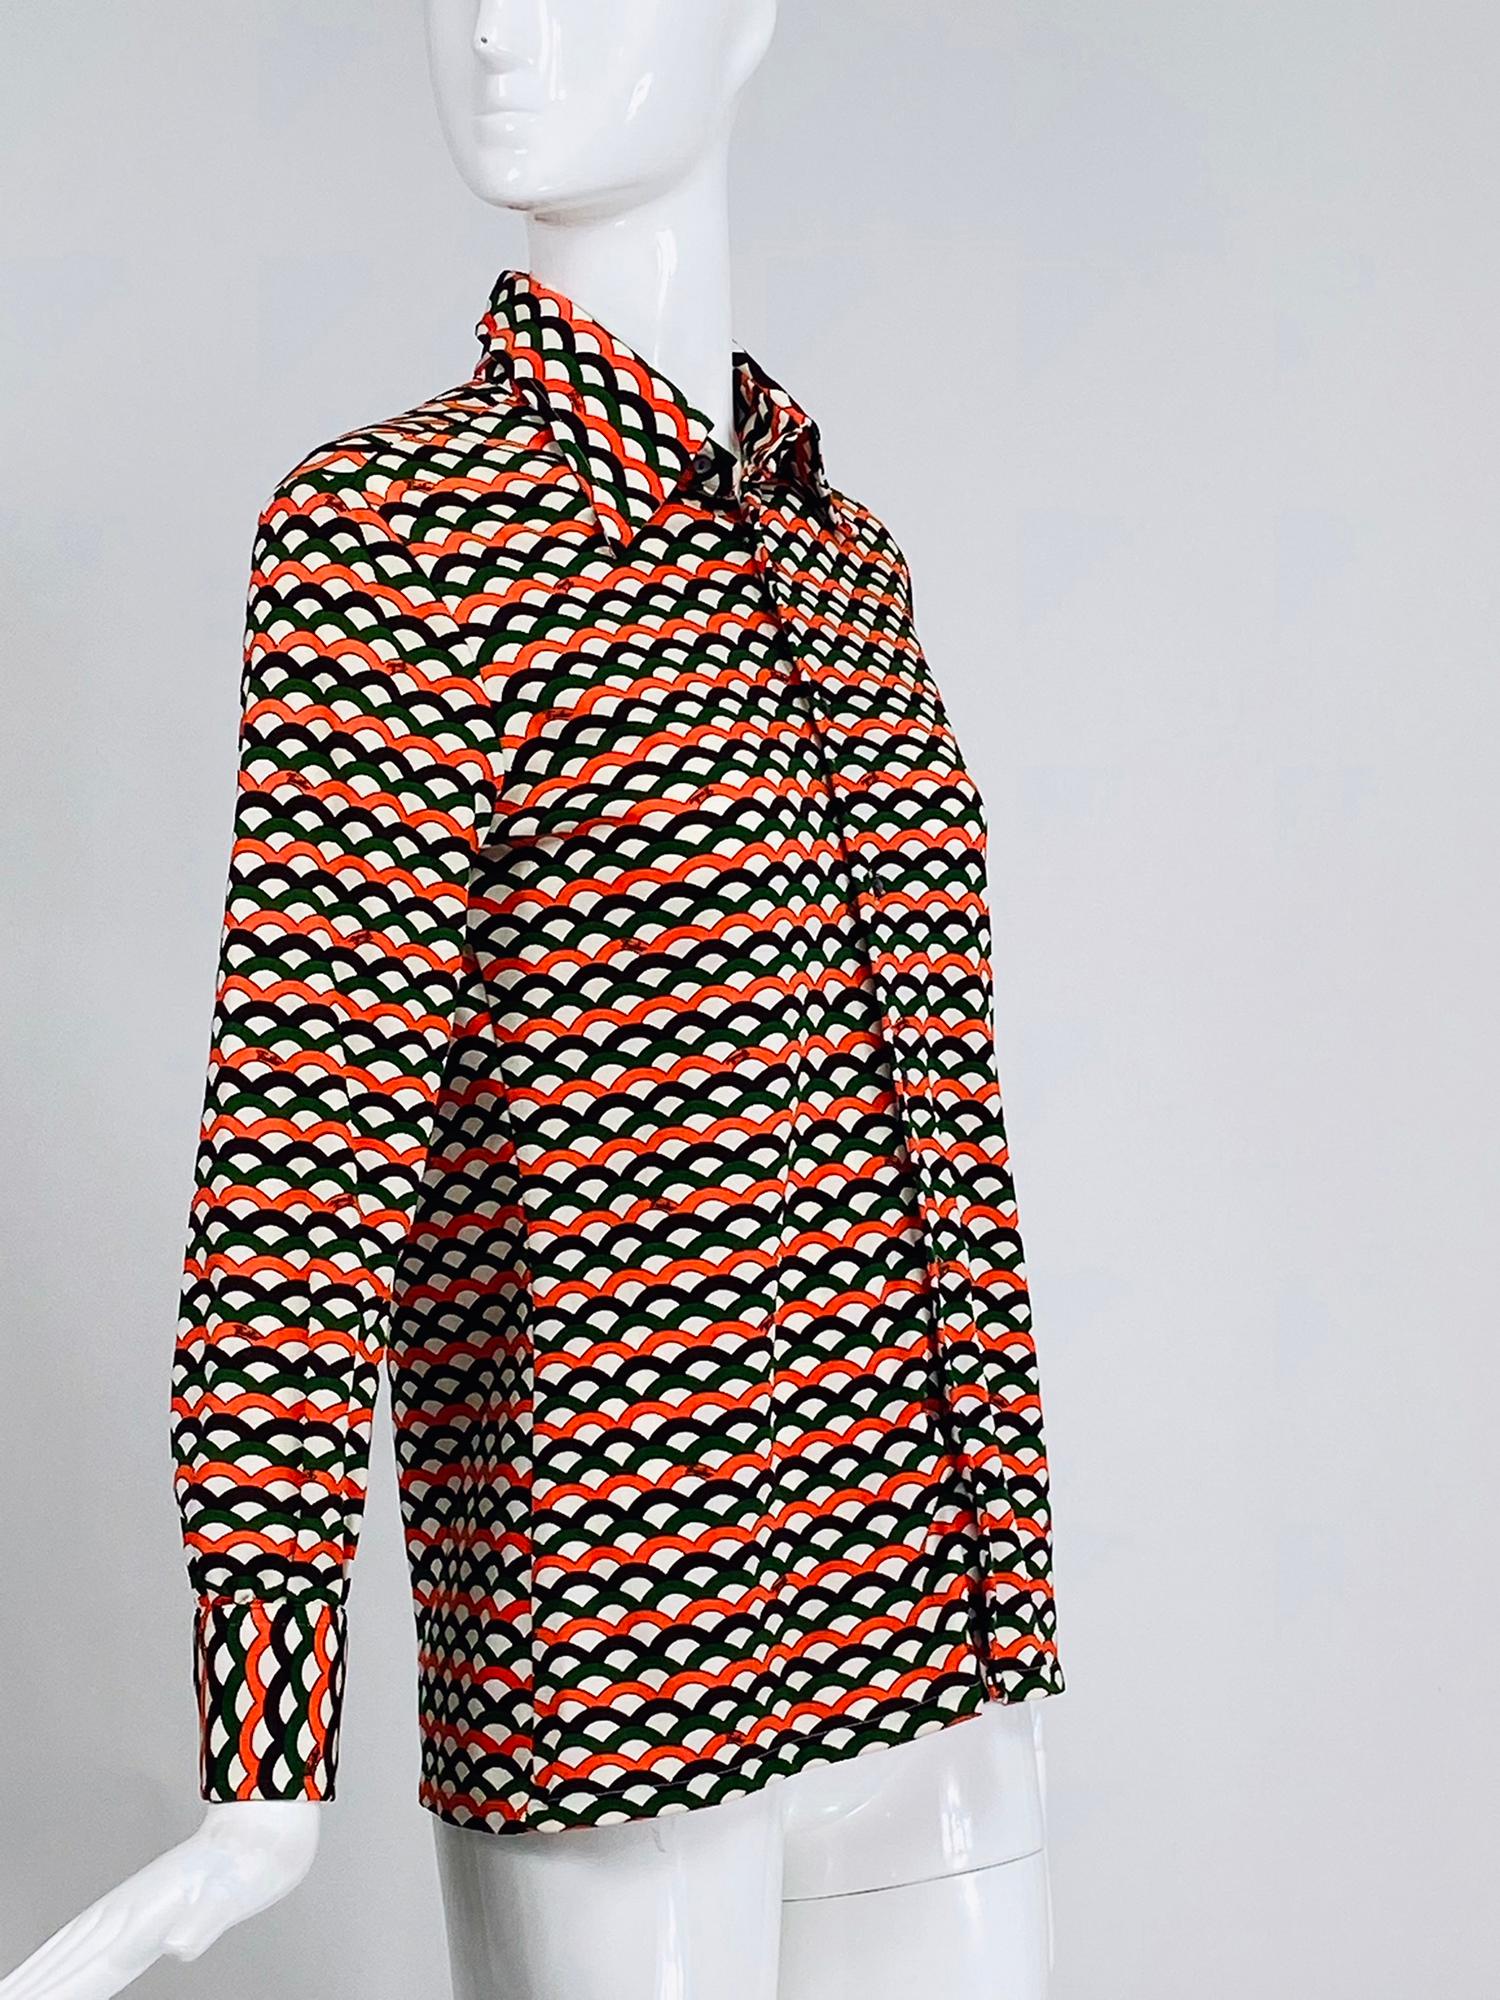 Emilio Pucci Signed Geometric Print Shirt 1970s 3